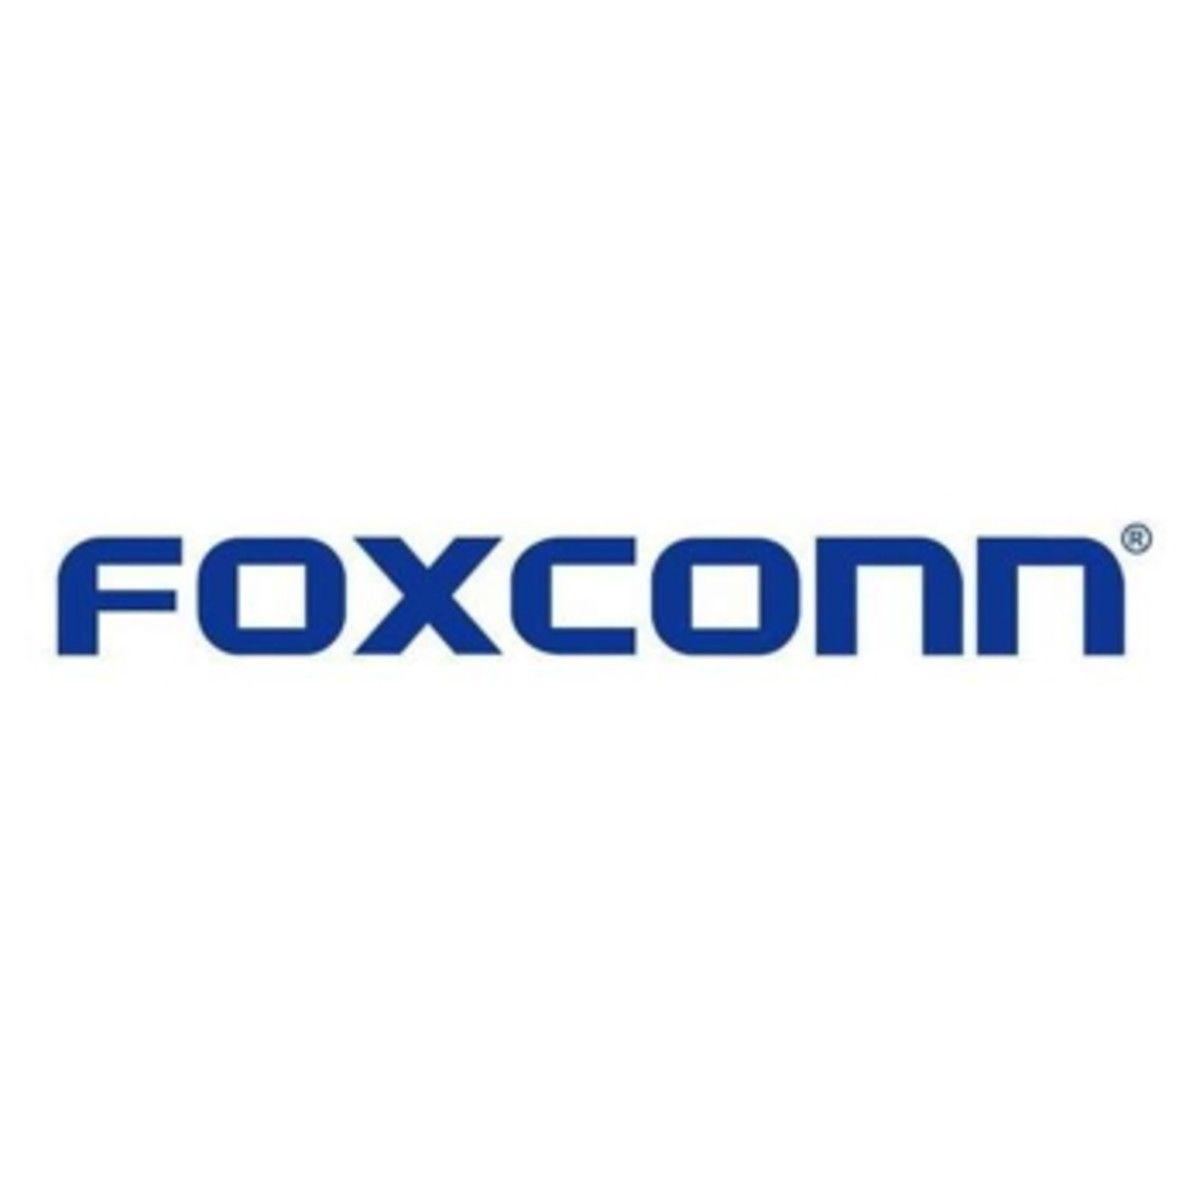 Foxconn Logo - Foxconn experiences October revenues boost